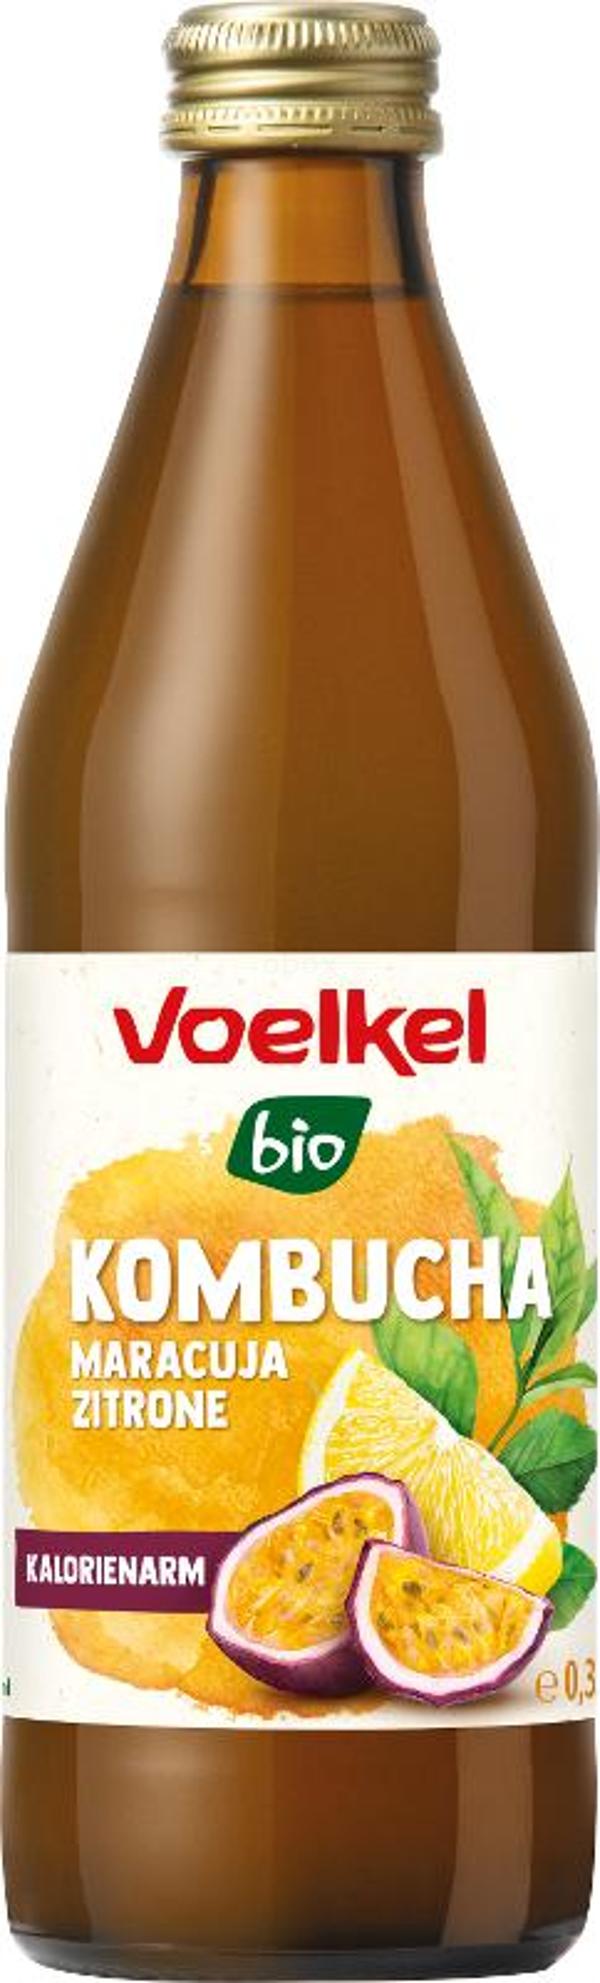 Produktfoto zu Kombucha Maracuja & Zitrone, 0,33 l